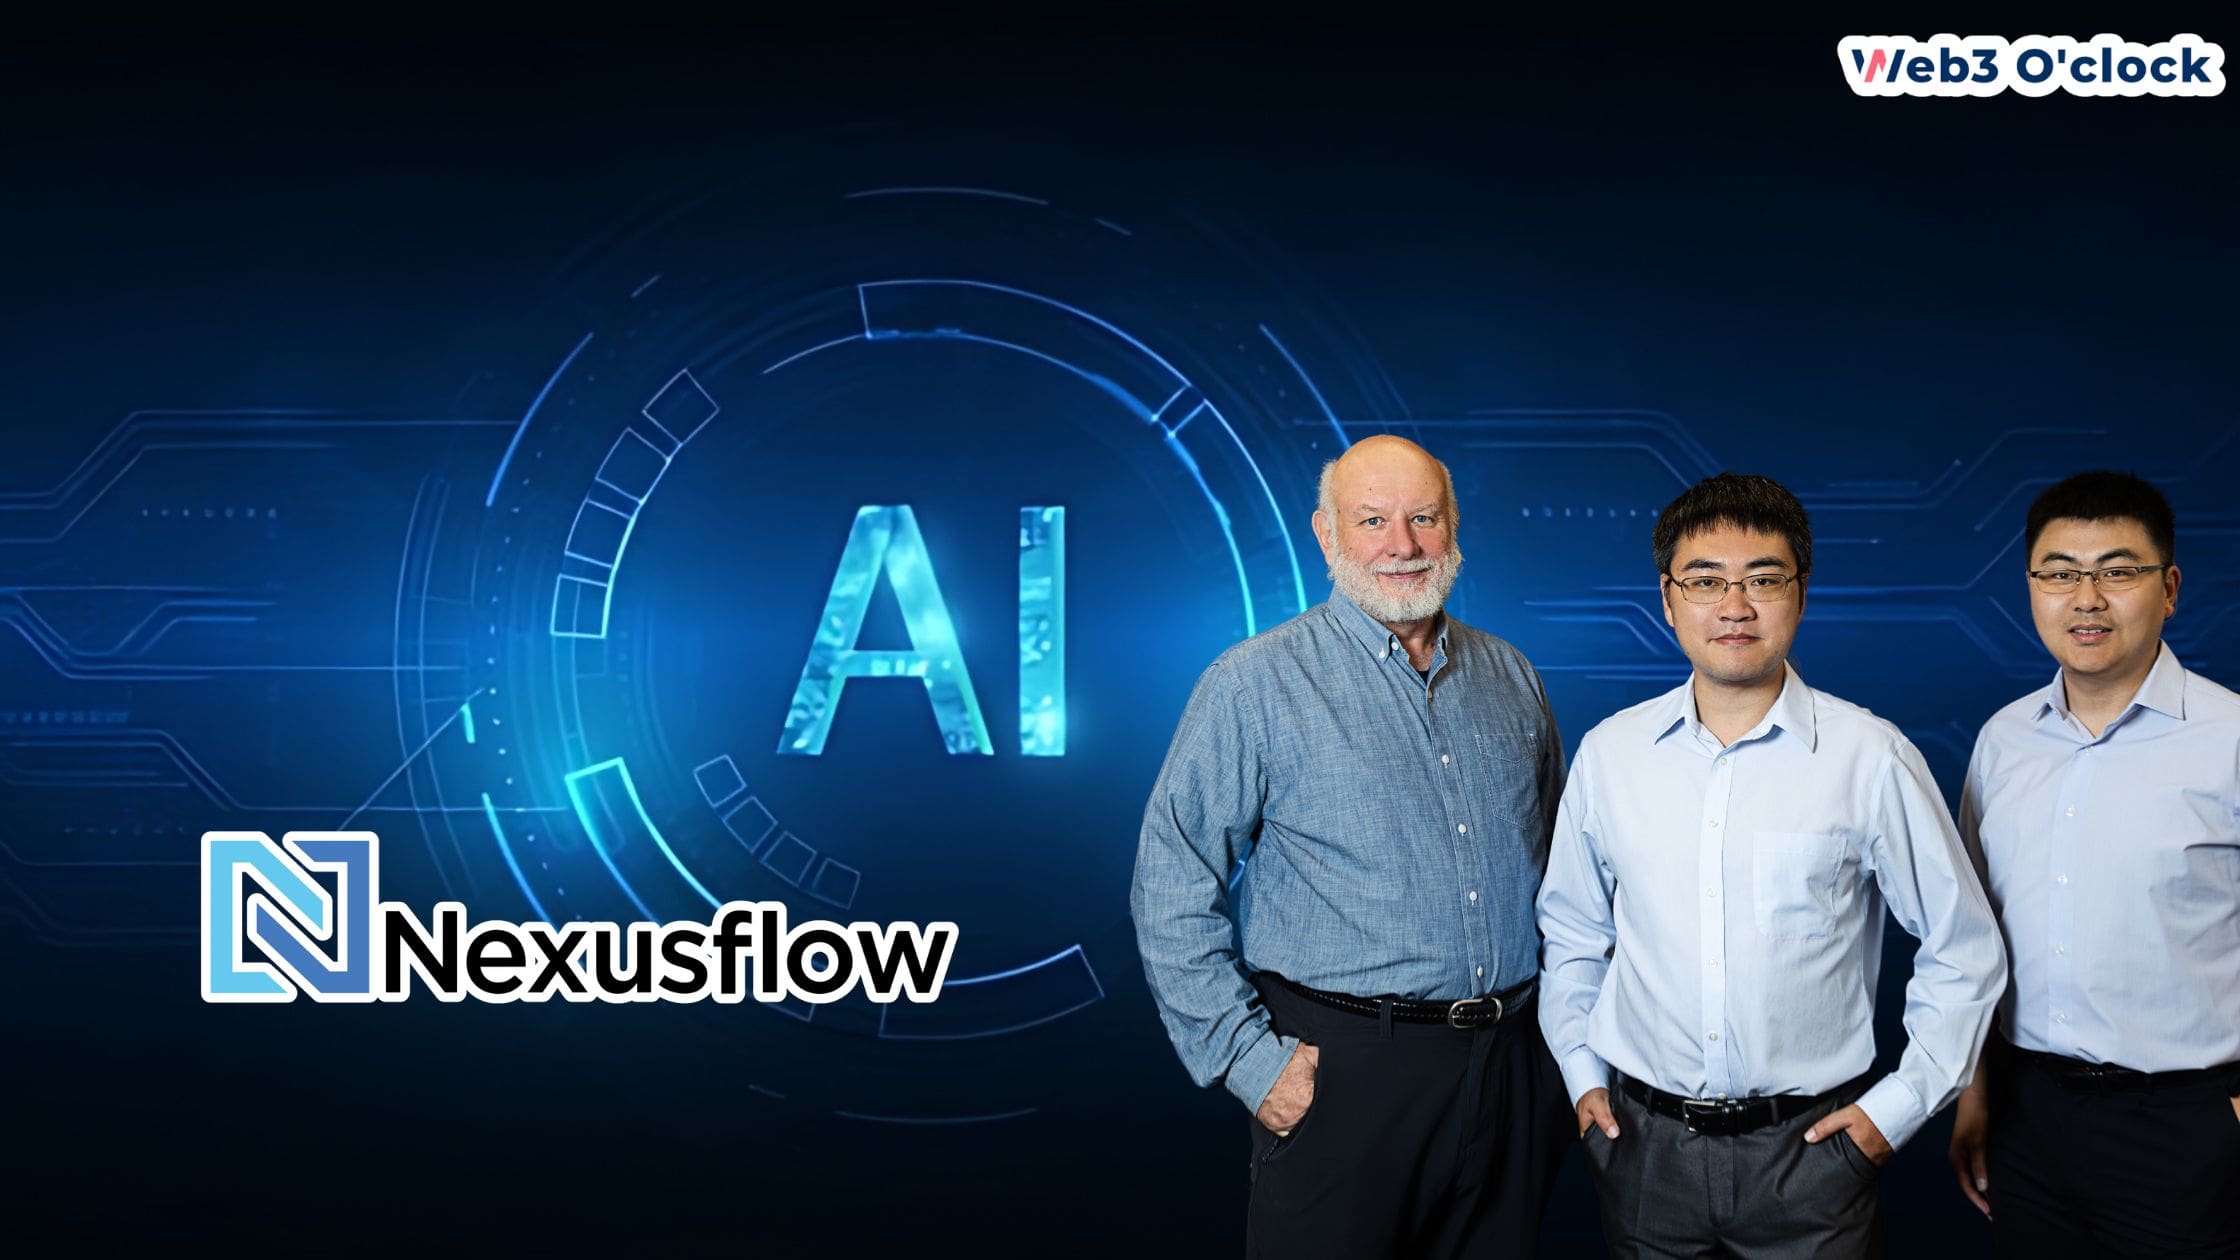 Nexusflow Raises $10.6 Million by web3oclock